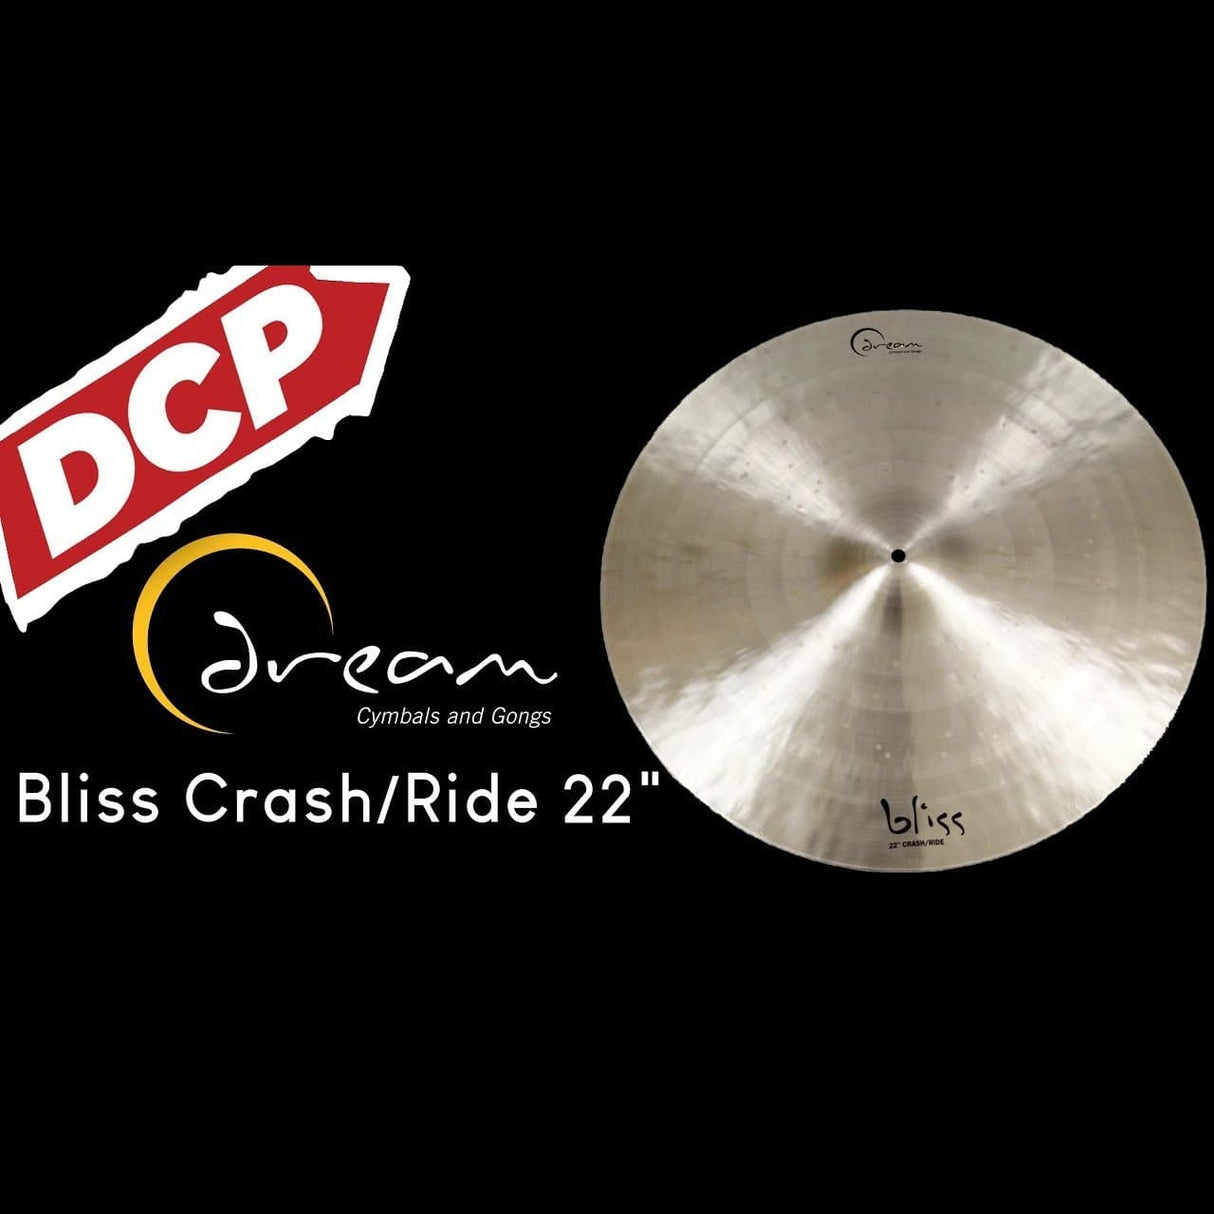 Dream Bliss Crash Ride Cymbal 22" 2405 grams